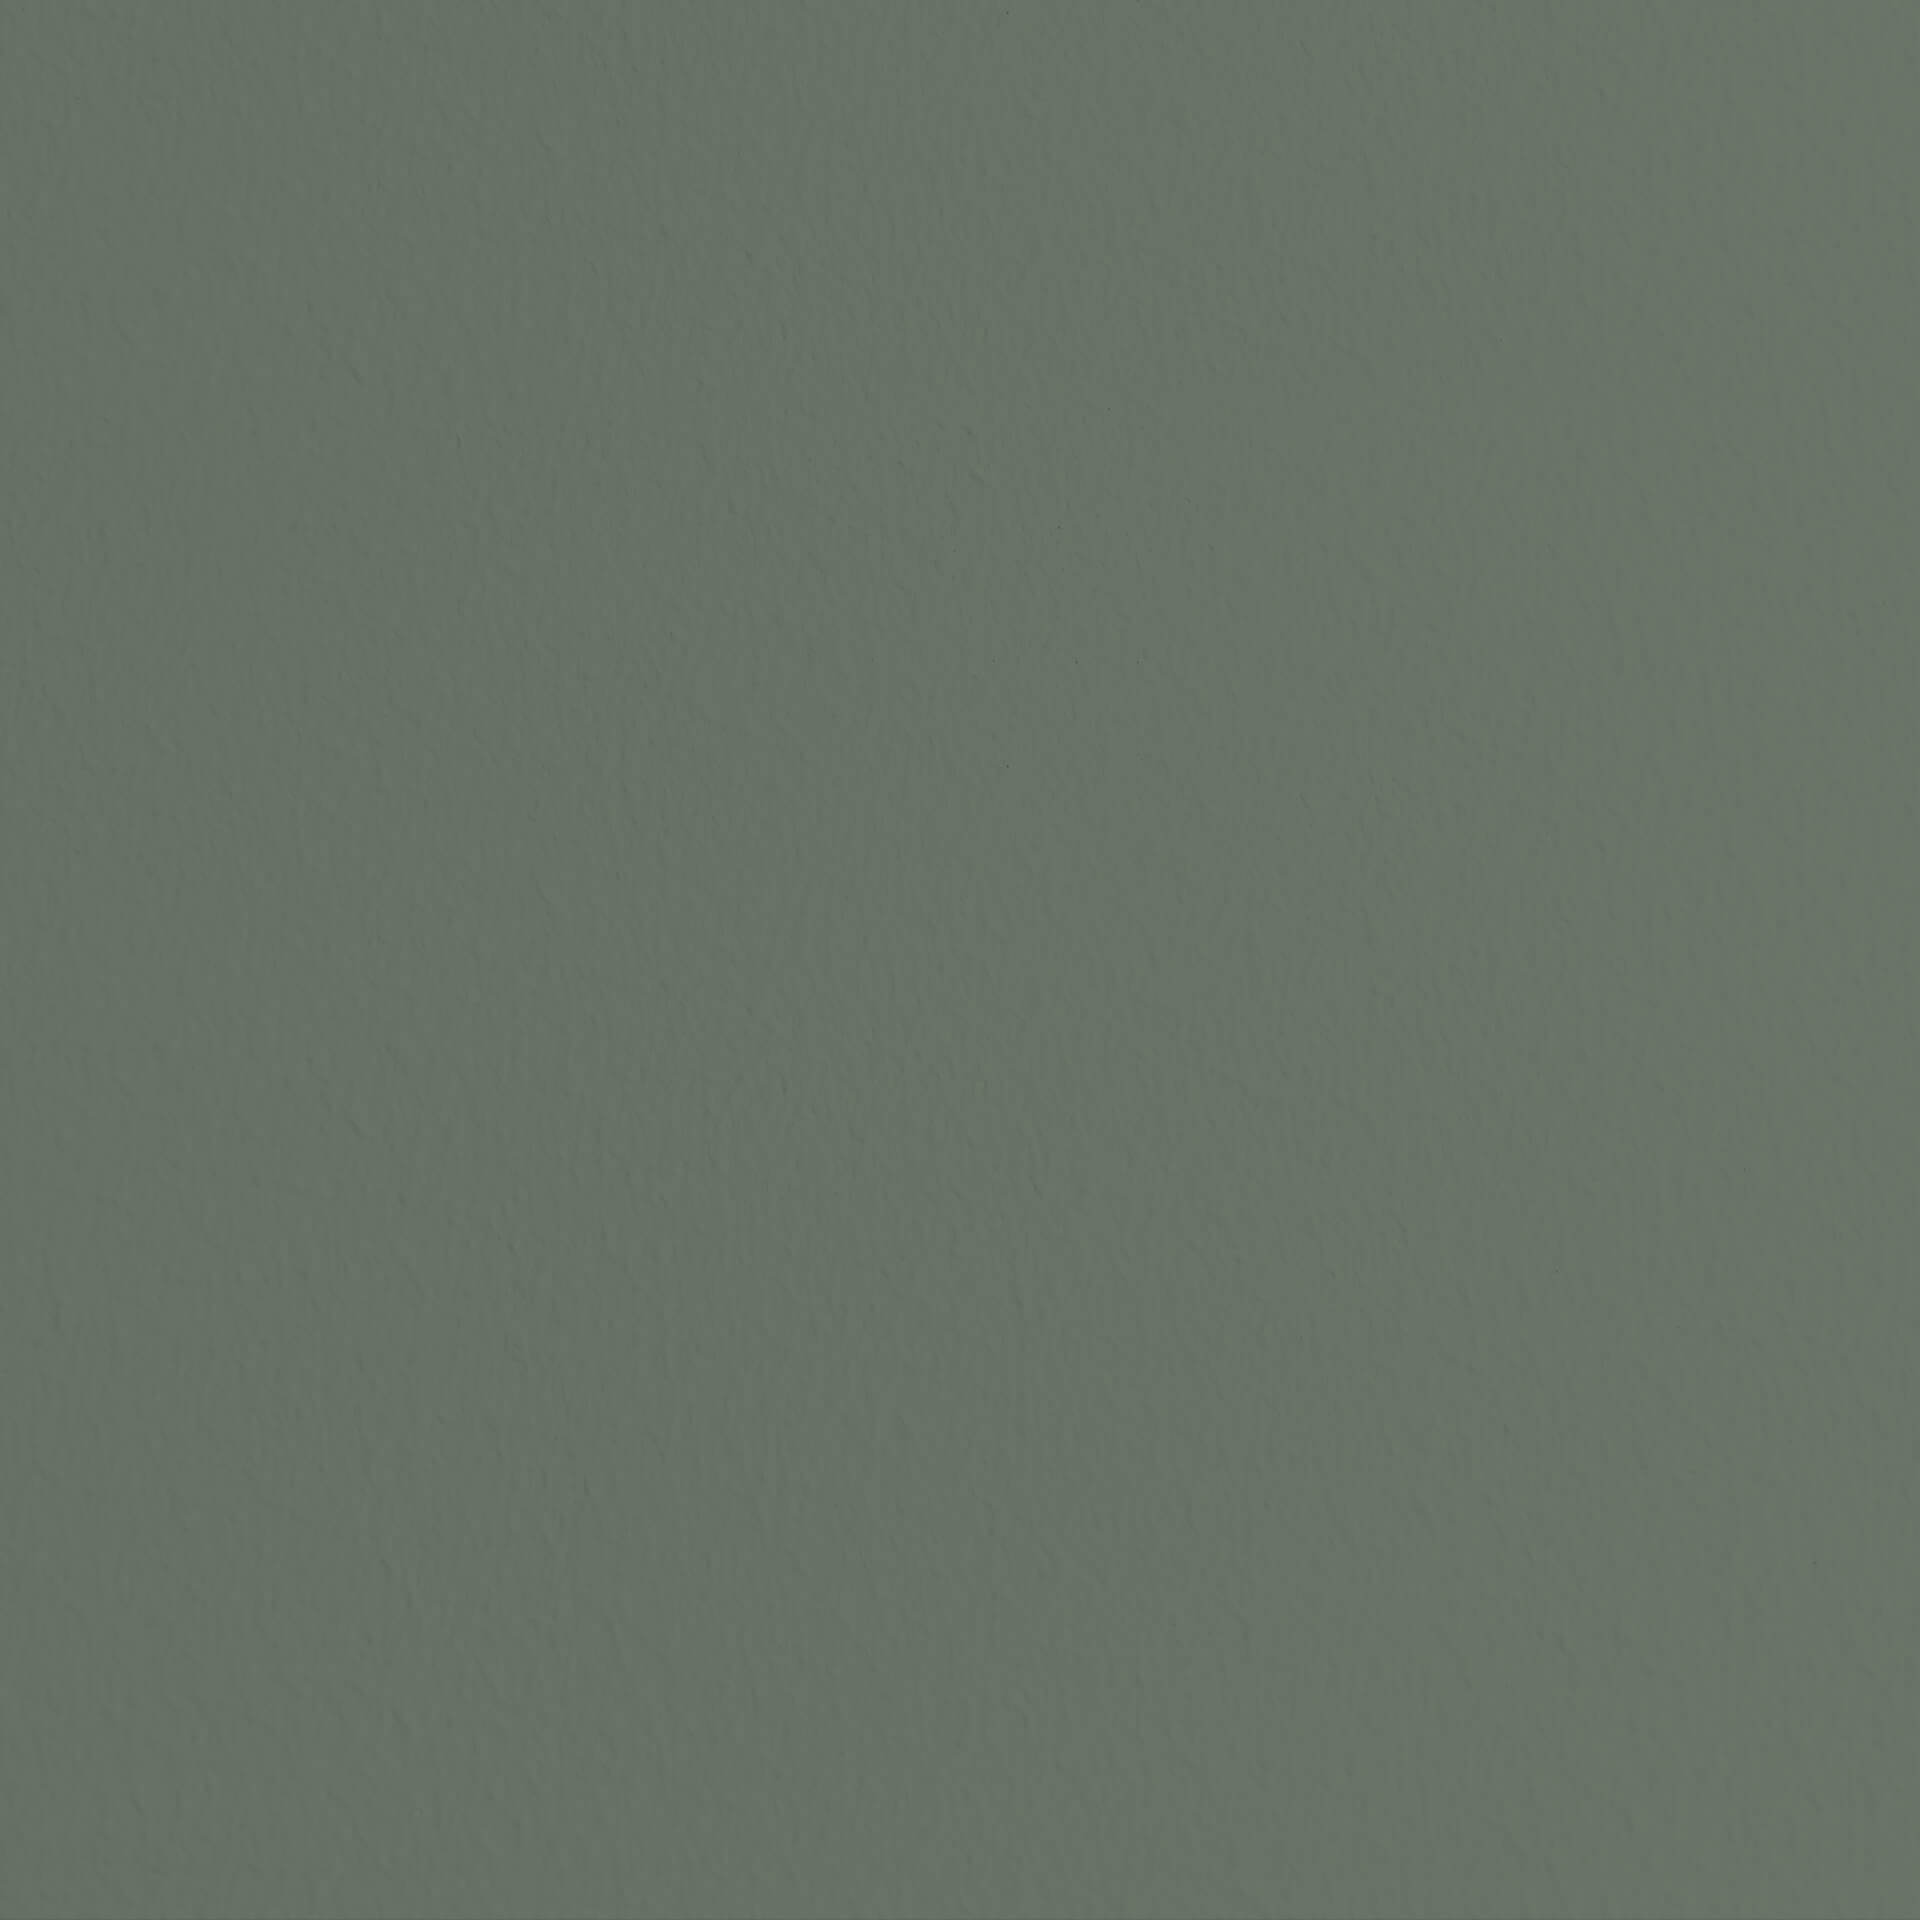 Mylands Myrtle Green No. 168 - Marble Matt Emulsion / Wandfarbe, 1L